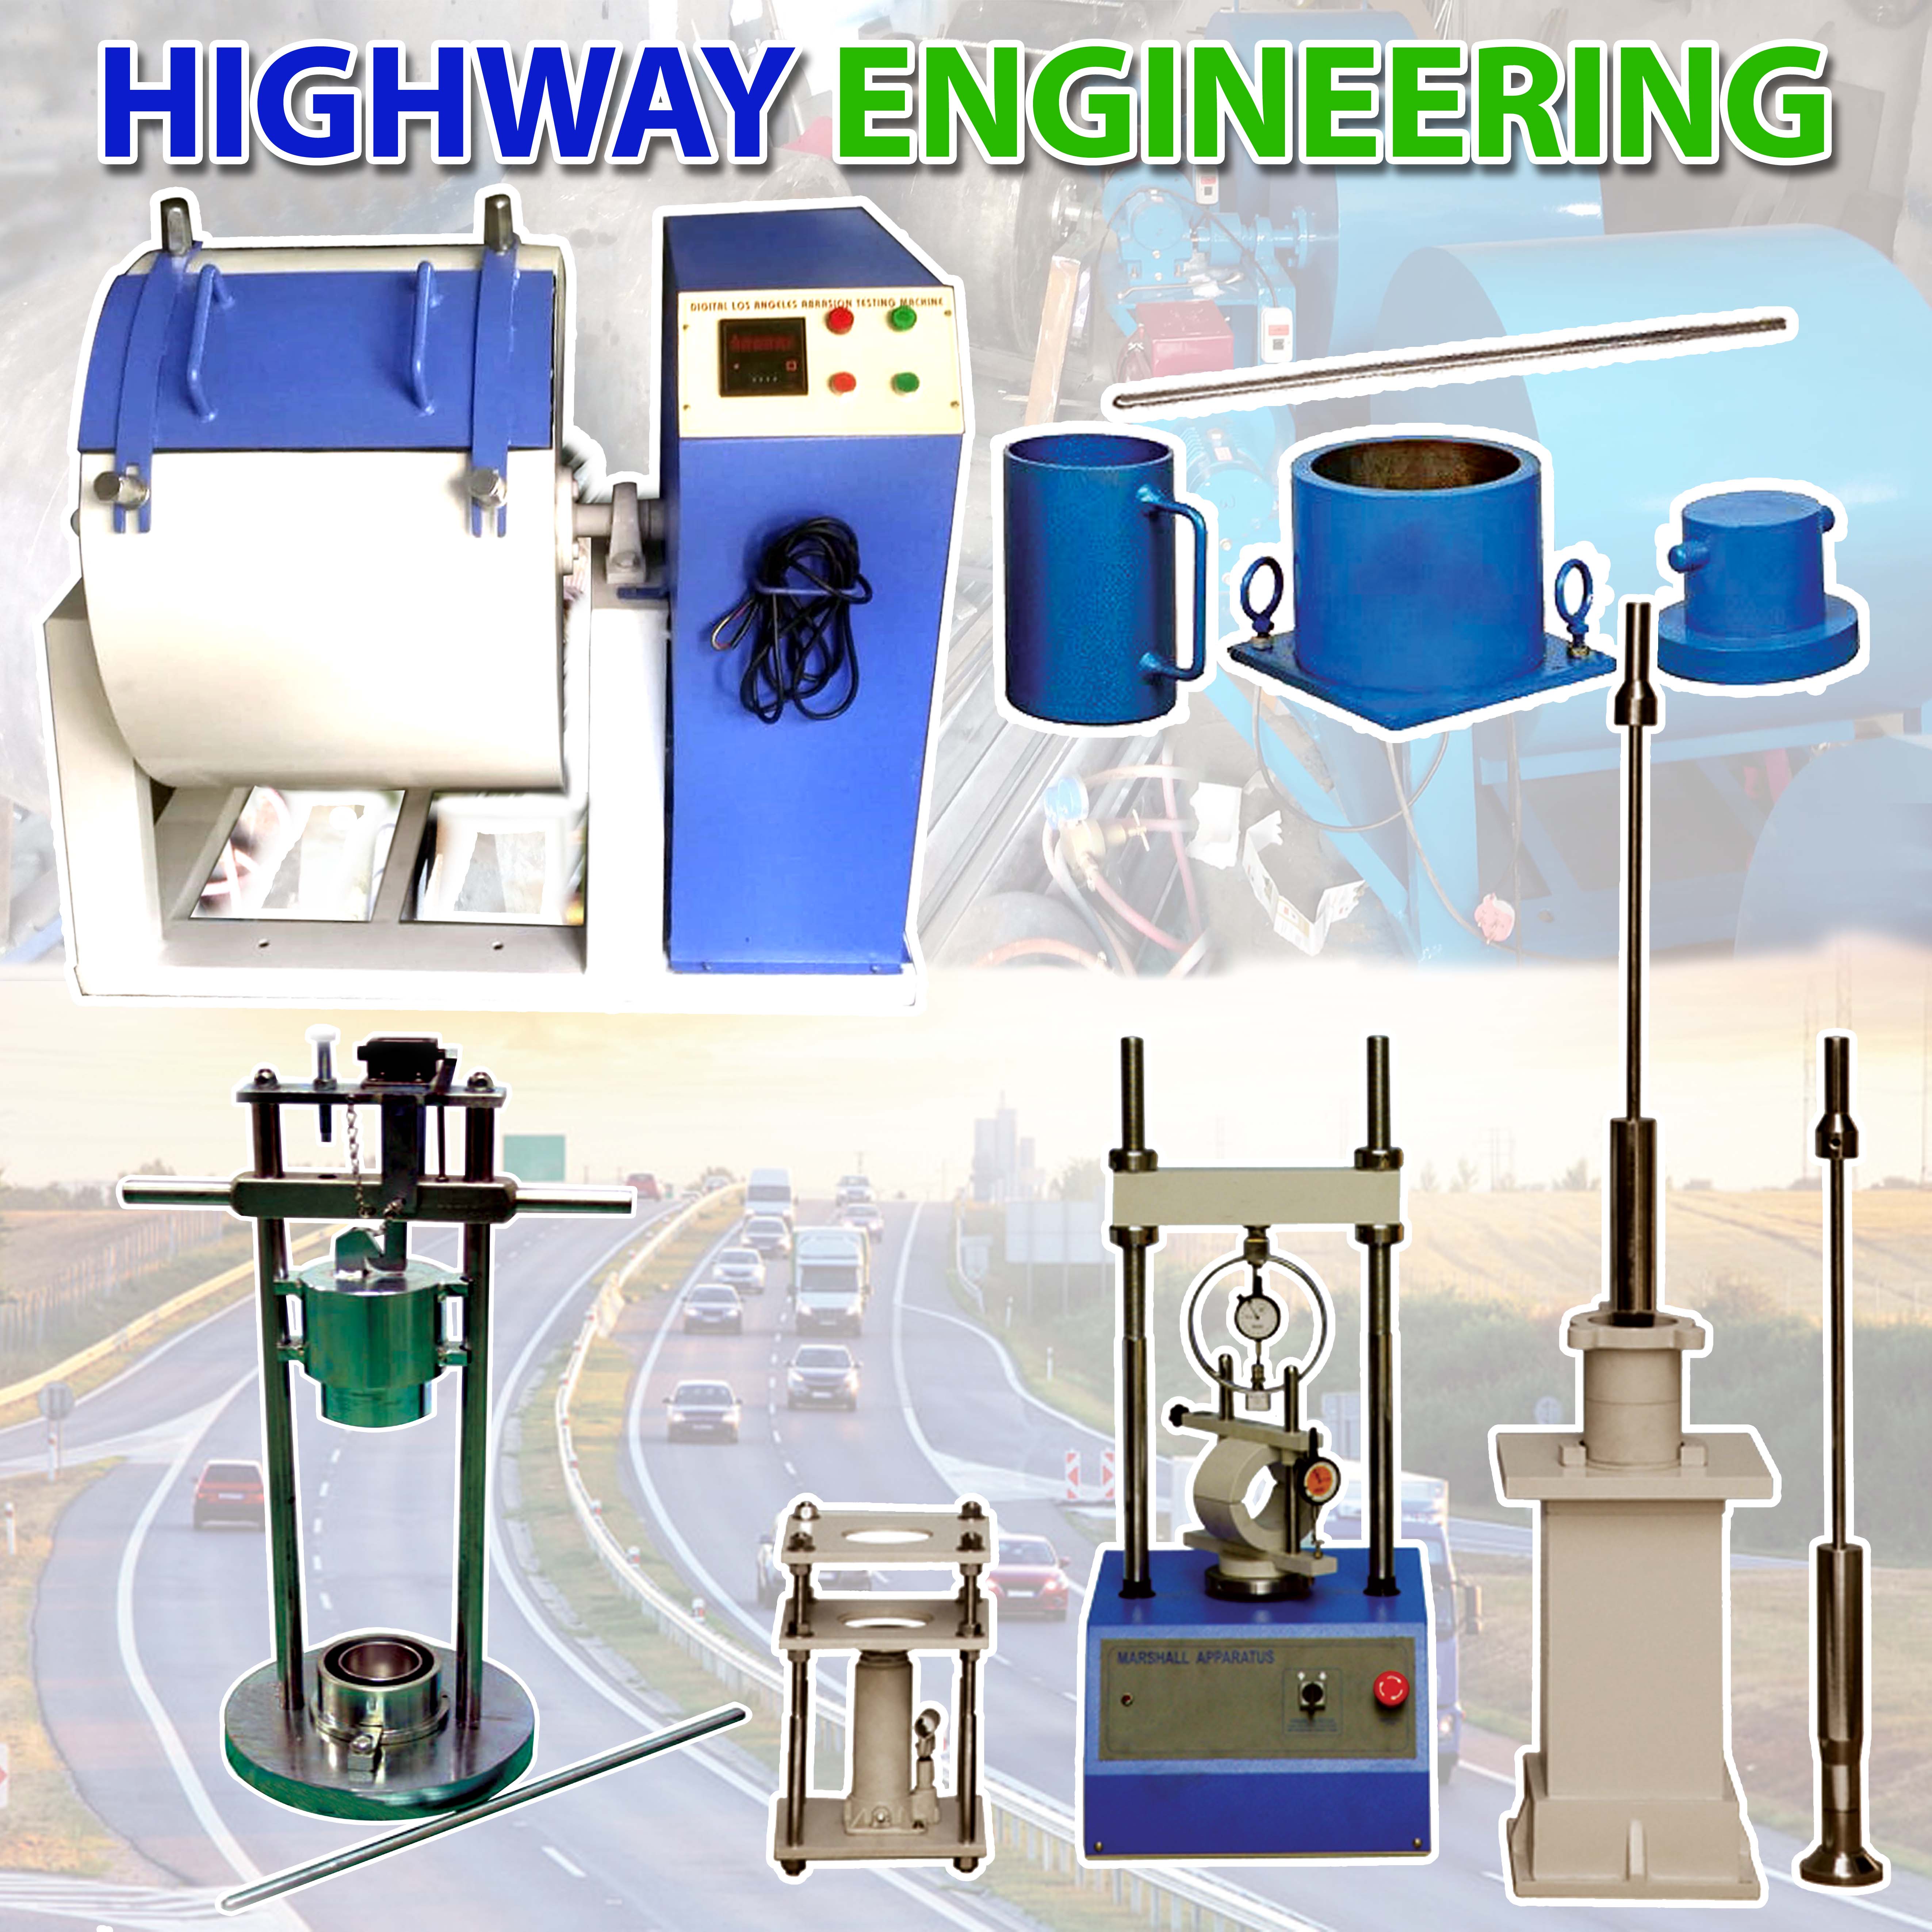 Highway Engineering Lab Equipment